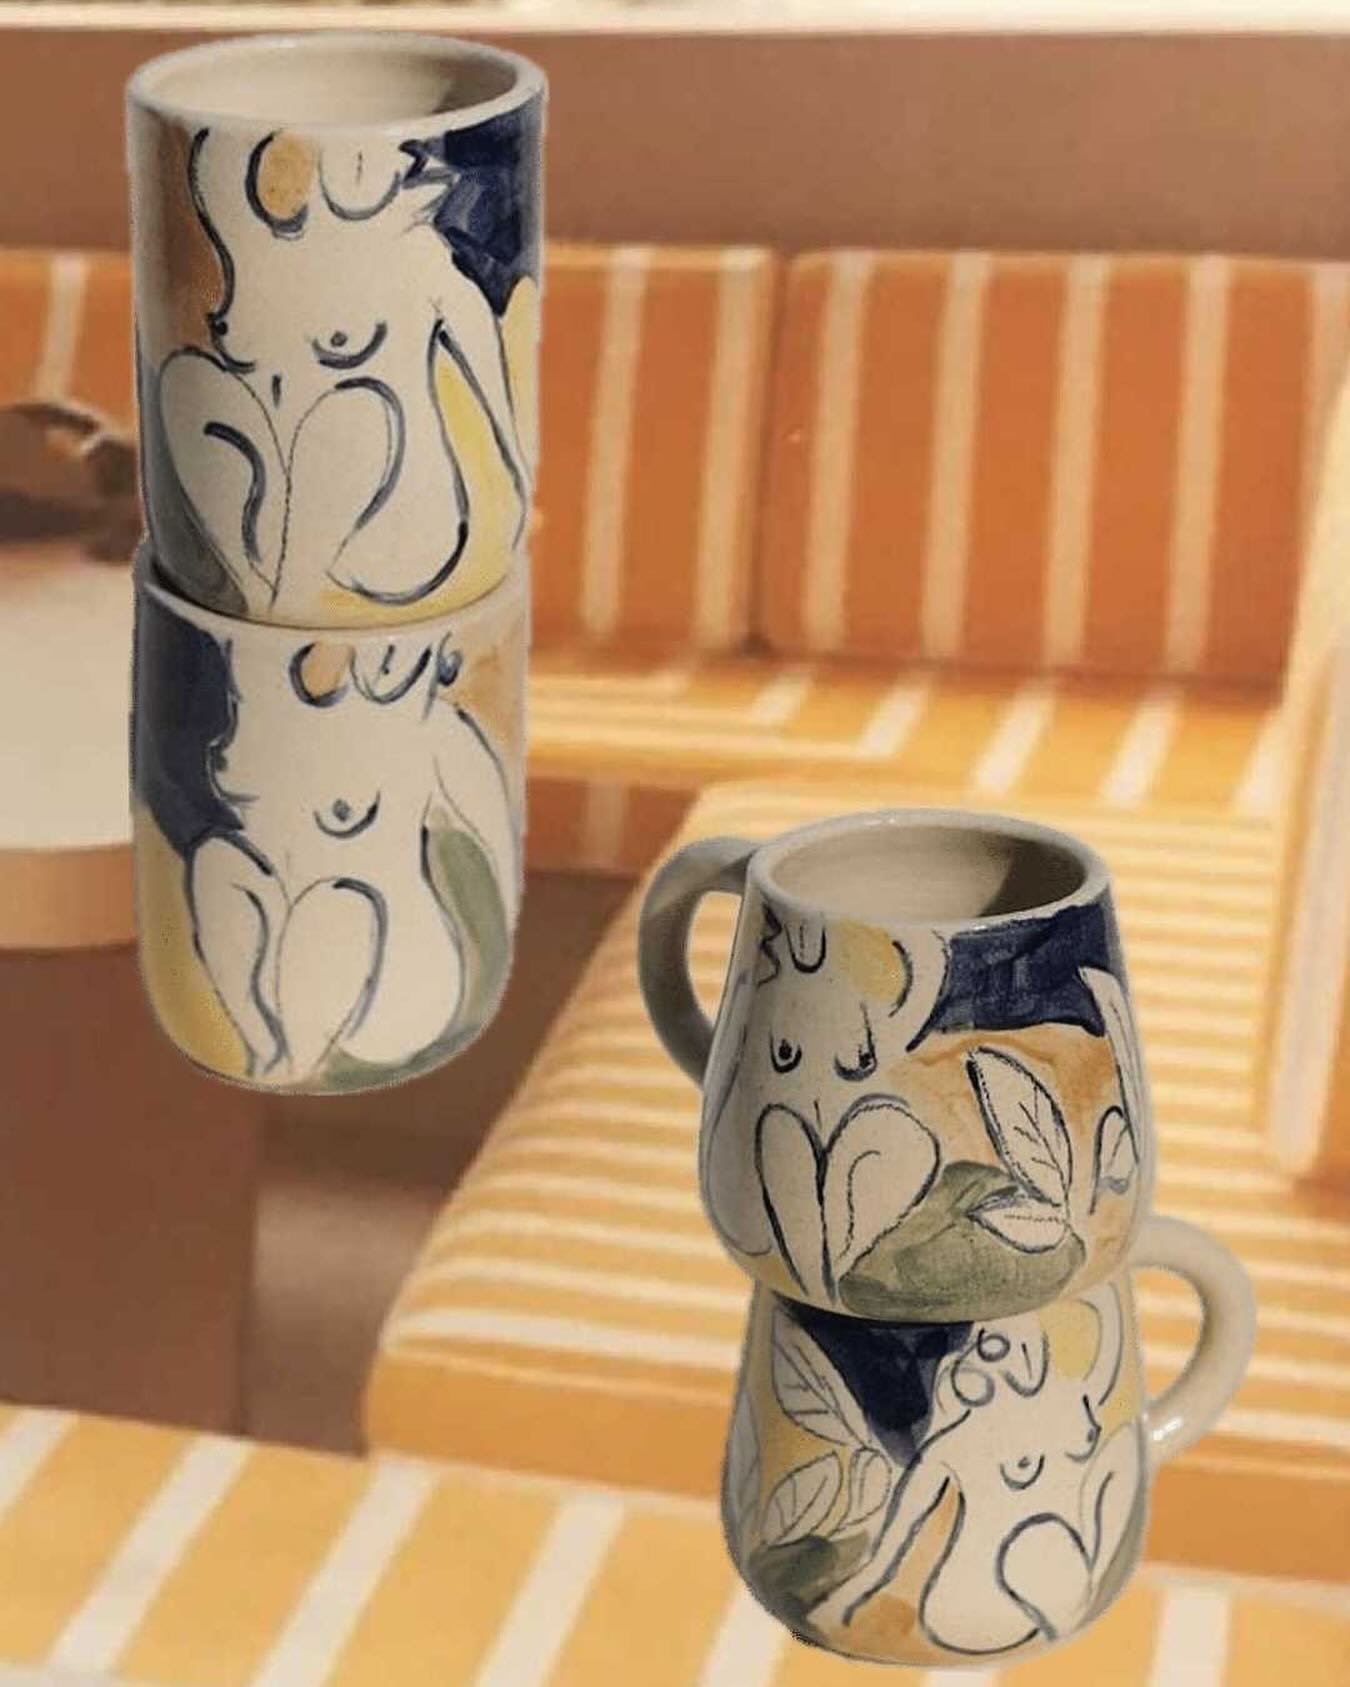 Croisette Cup and Mug now available. Link in bio. #ceramics #pottery #homegoods #homedecor #interior #interiordesign #home #drinkware #handmade #handpainted #wheelthrown #mugs #heaceramics #frenchriviera #riviera